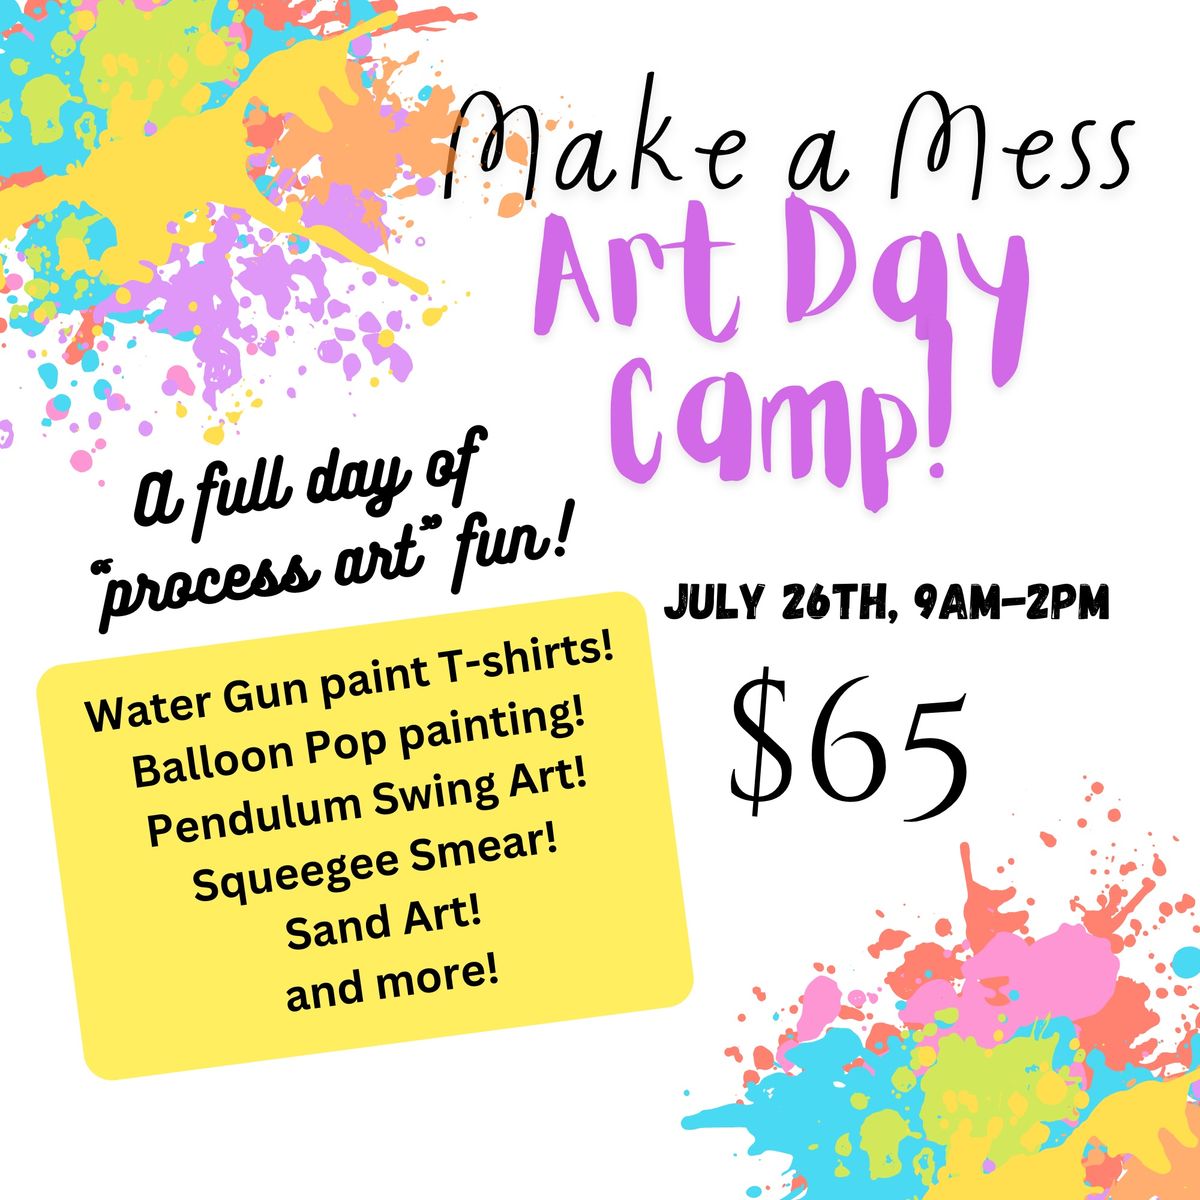 Make A Mess Art Day Camp!